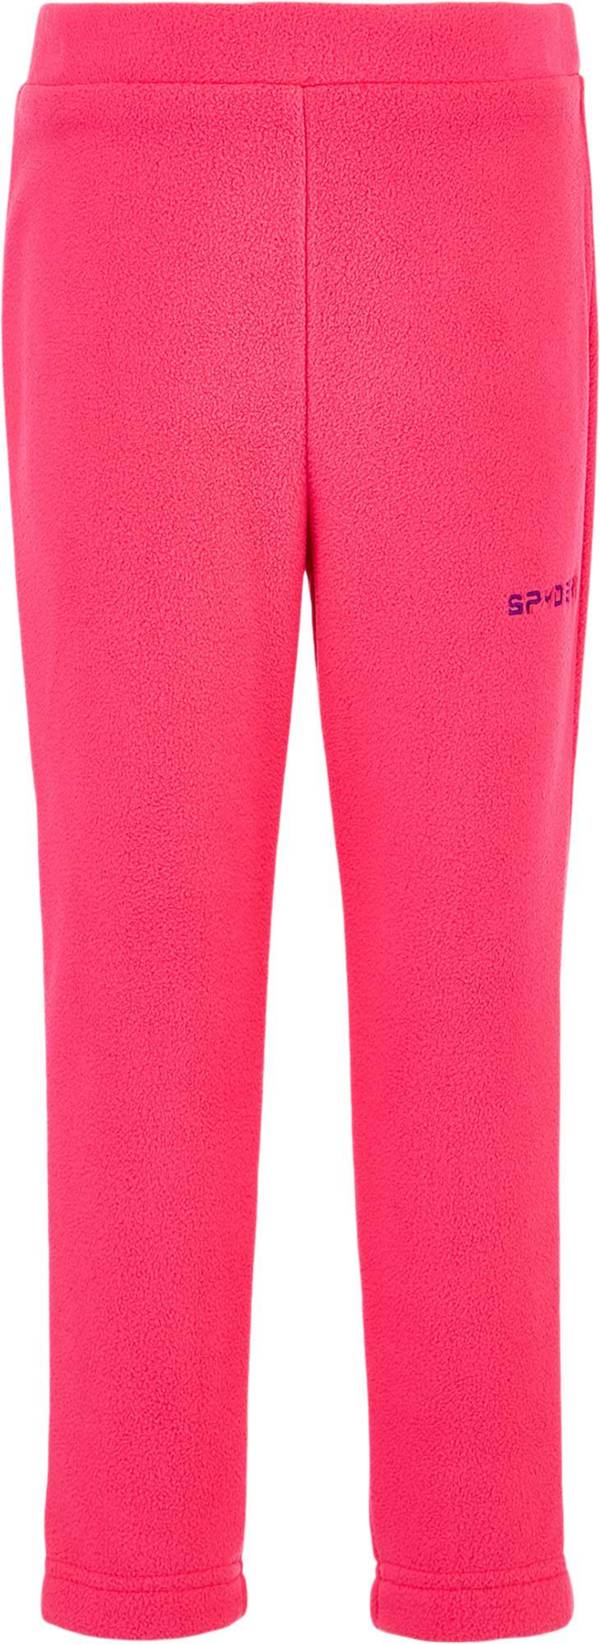 Spyder Girls' Speed Fleece Pants product image